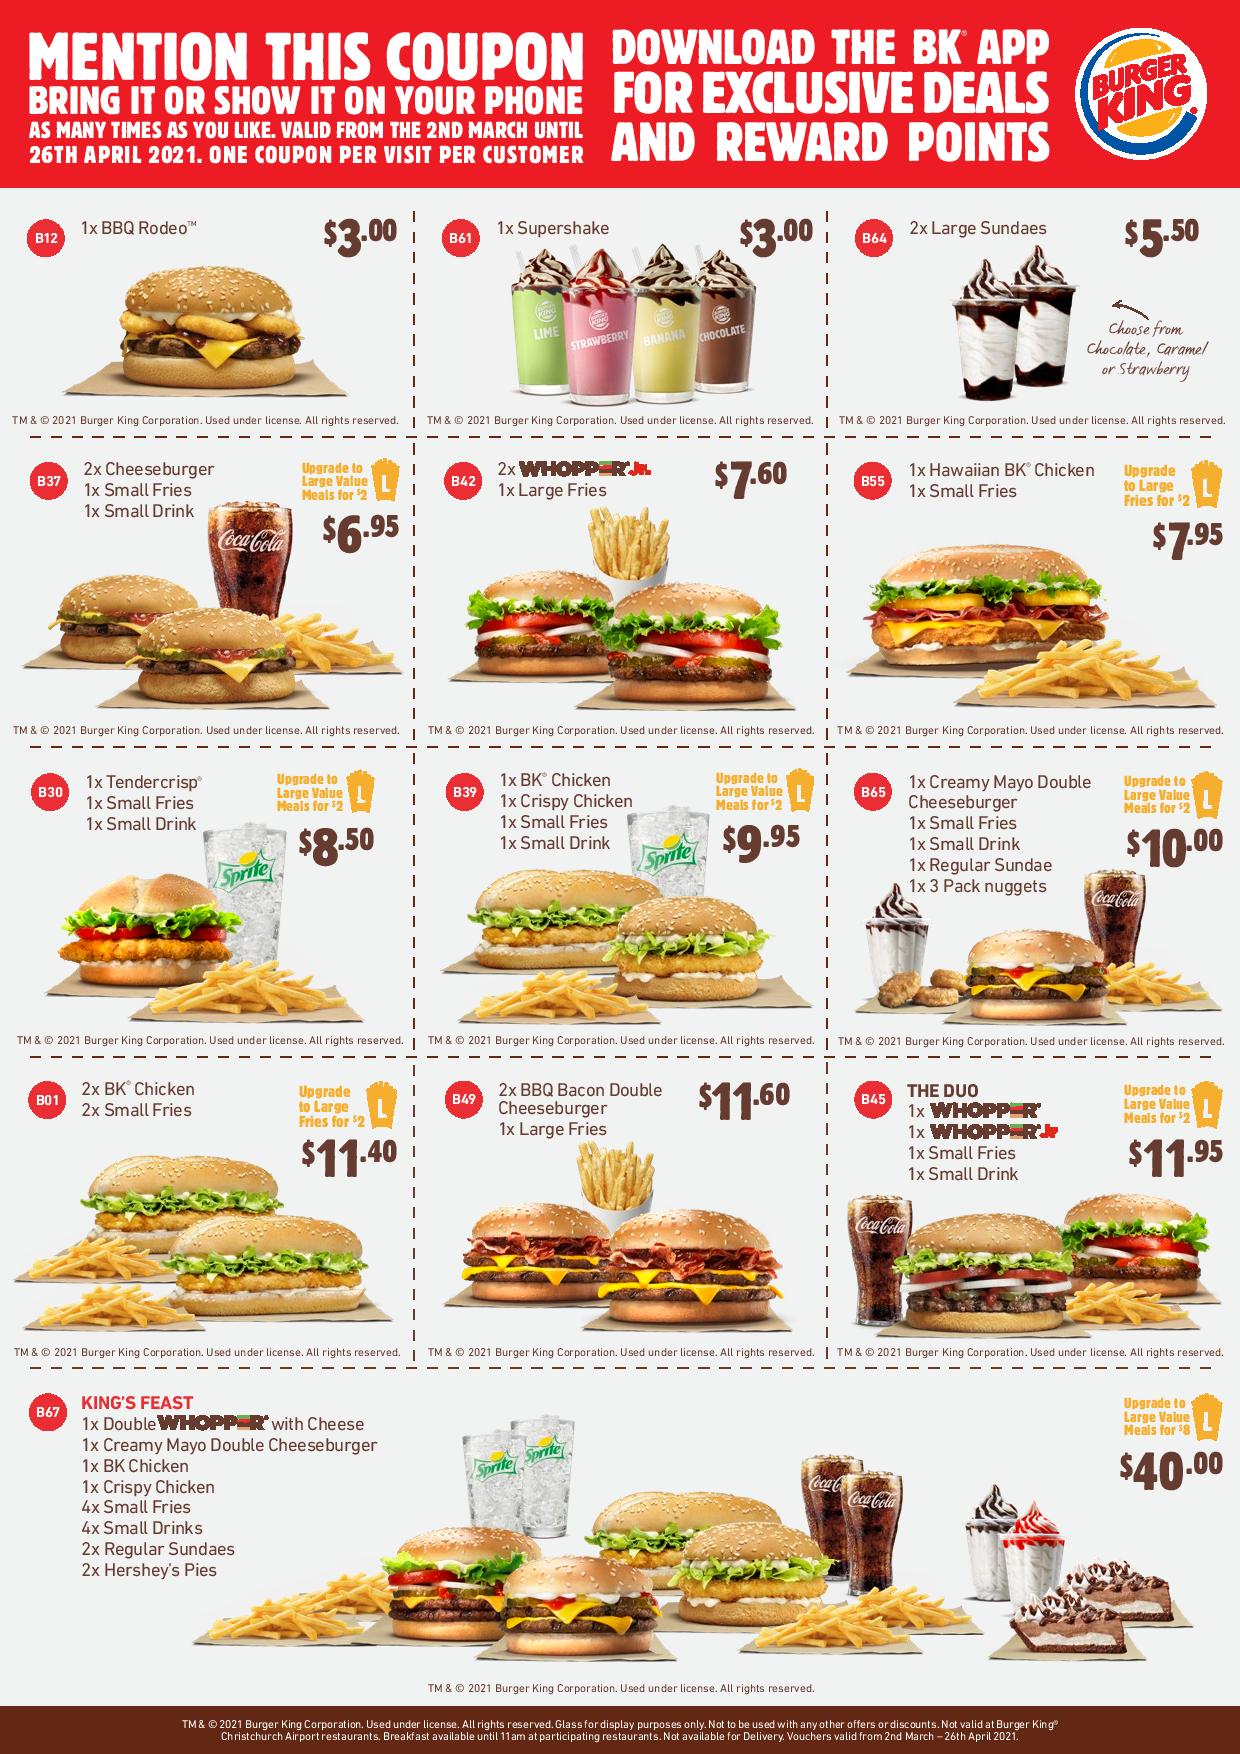 DEAL Burger King Coupons valid until 26 April 2021 Latest BK Coupons